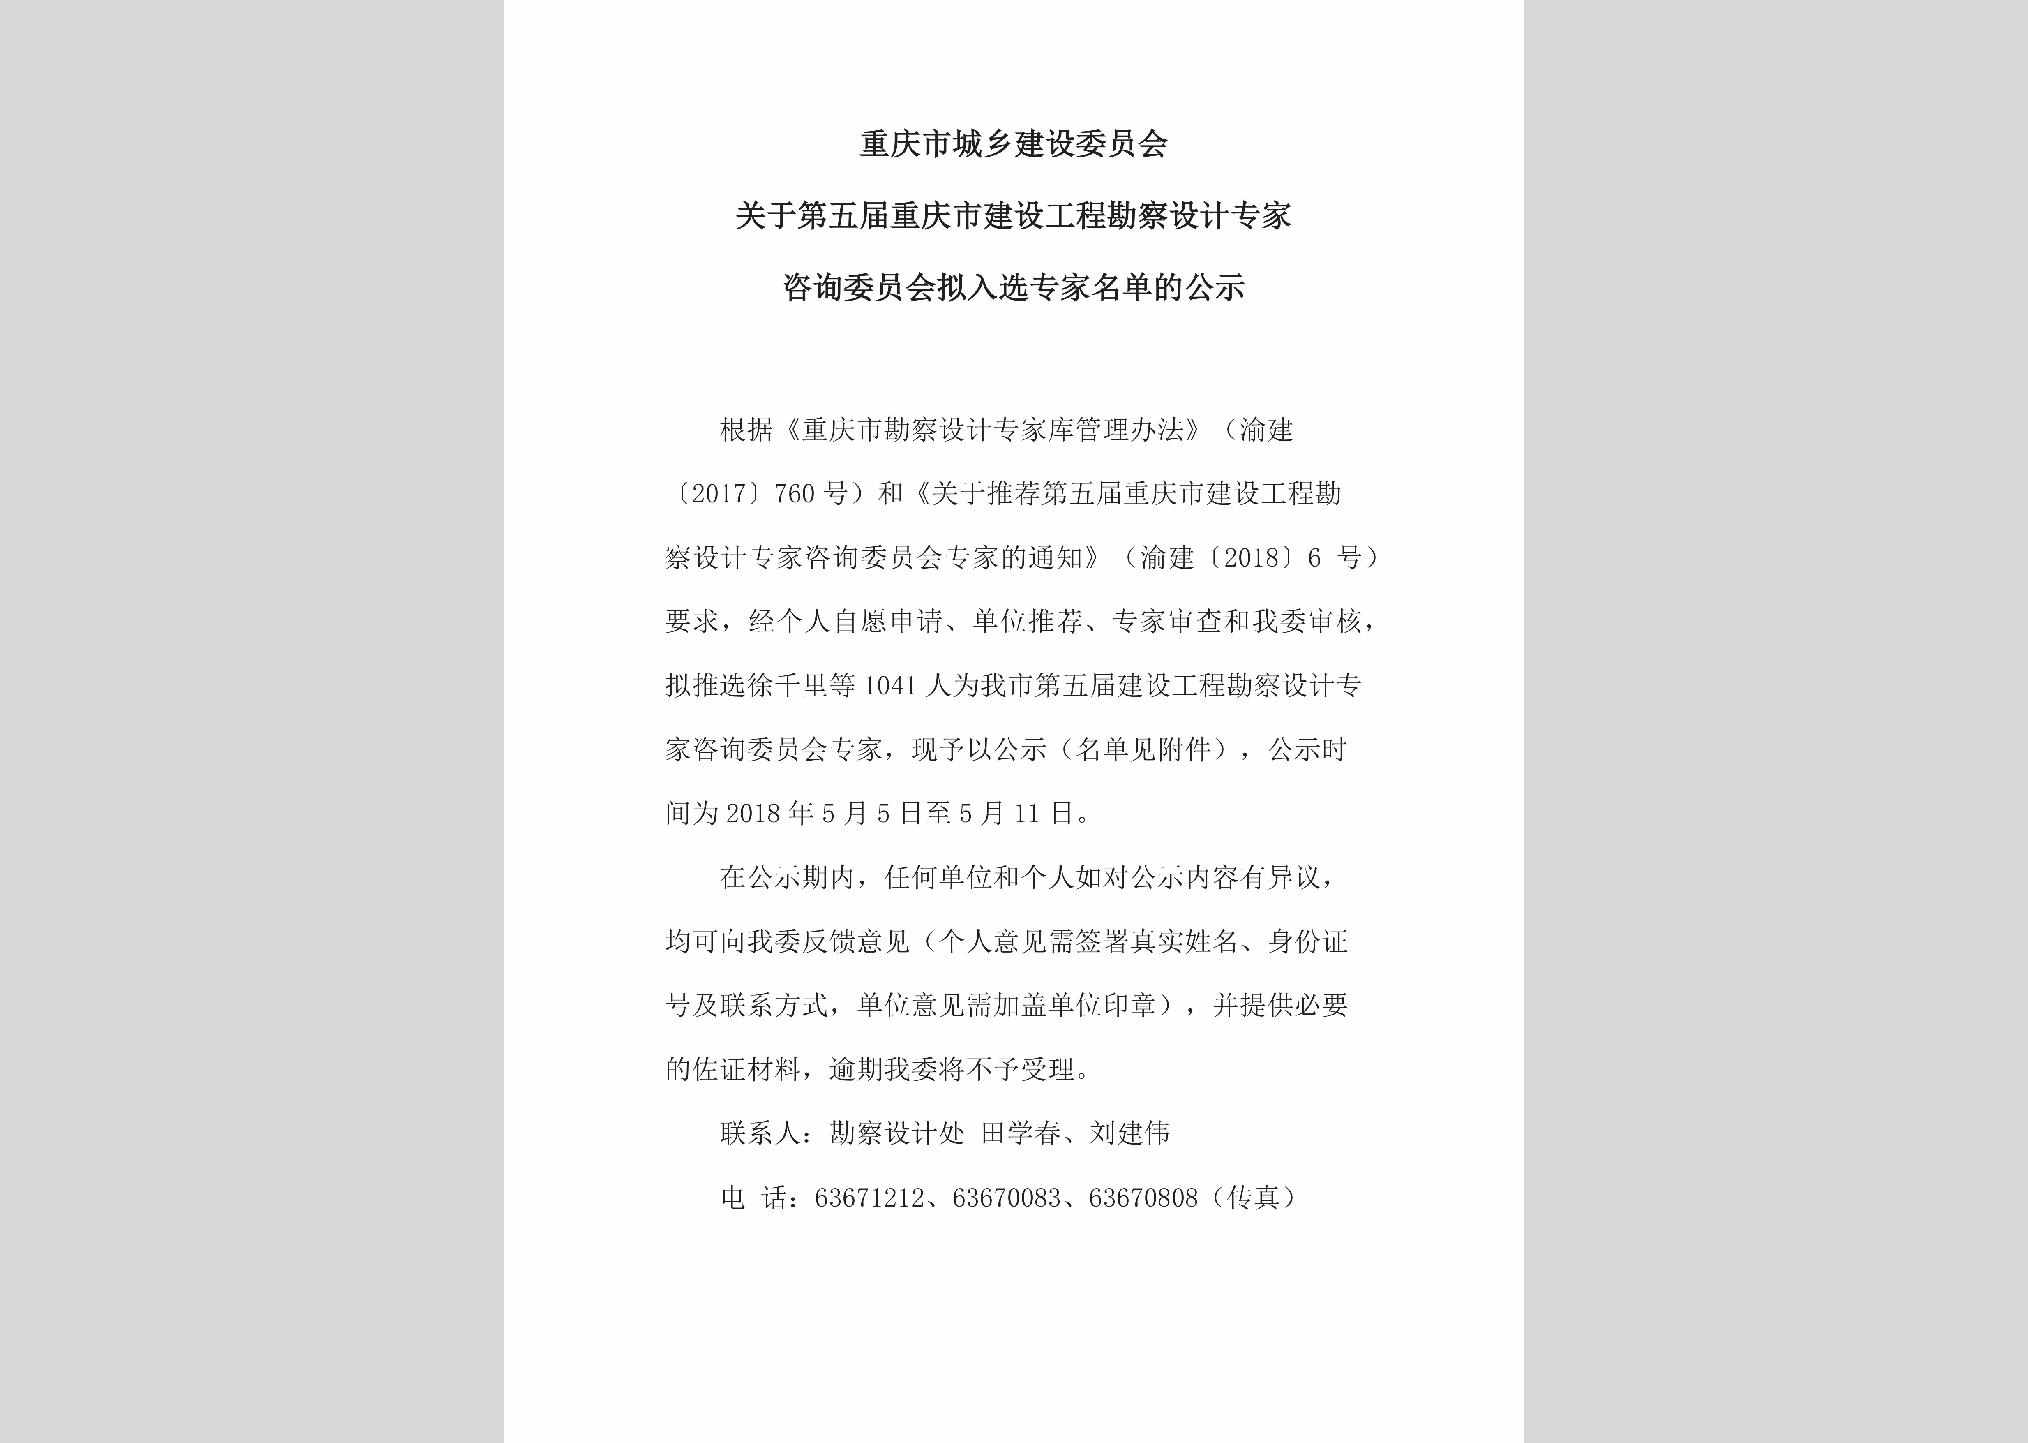 CQ-JSGCZCSJ-2018：关于第五届重庆市建设工程勘察设计专家咨询委员会拟入选专家名单的公示